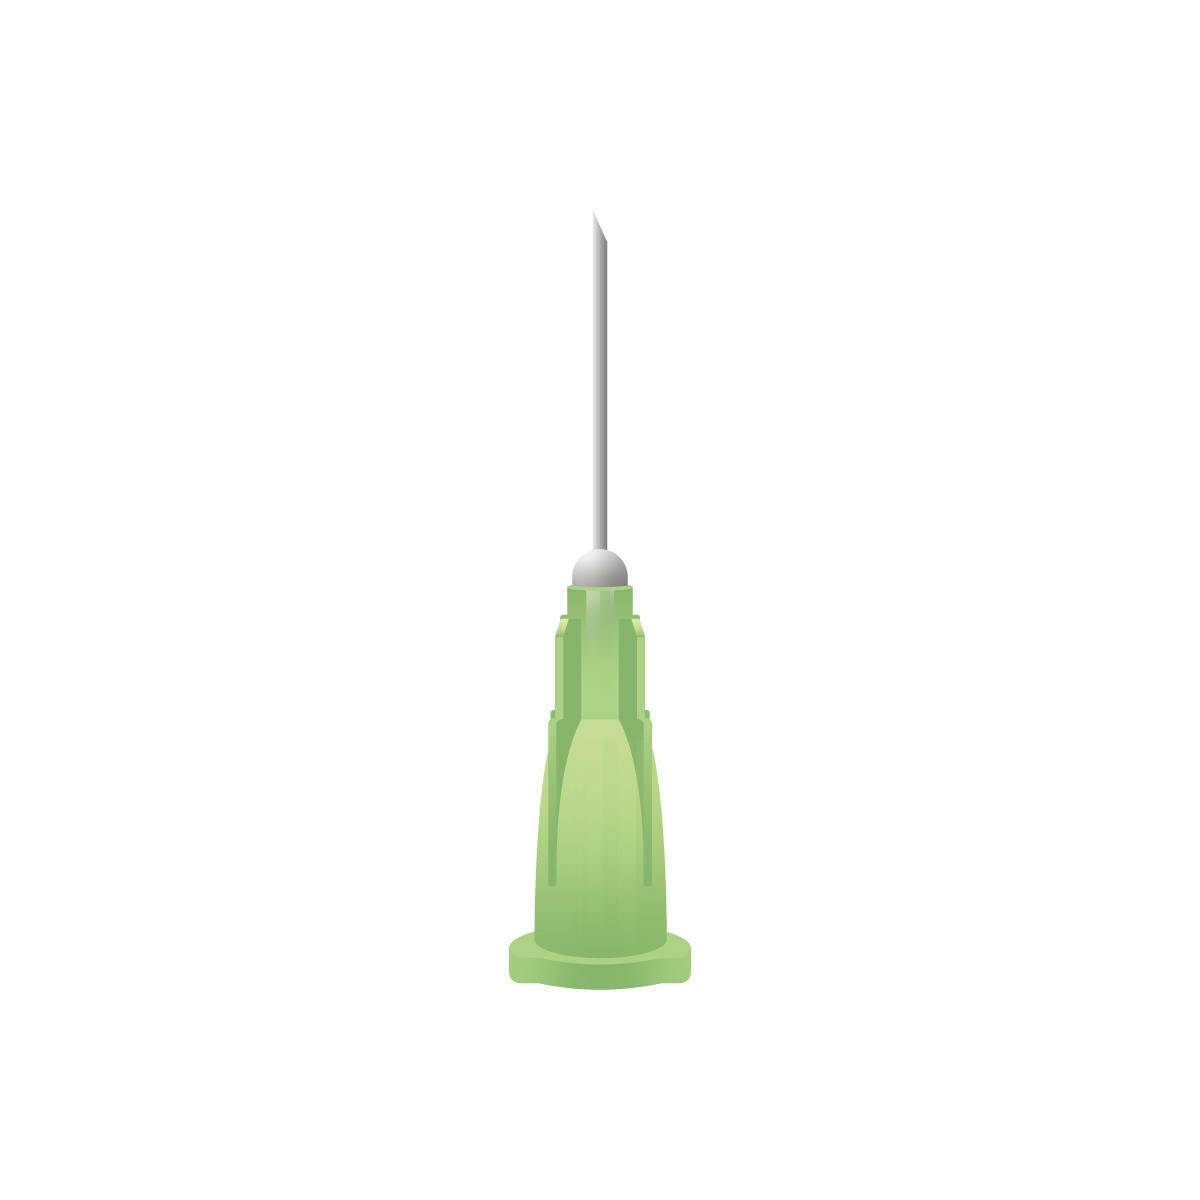 21g Green 5/8 inch BD Microlance Needles - UKMEDI